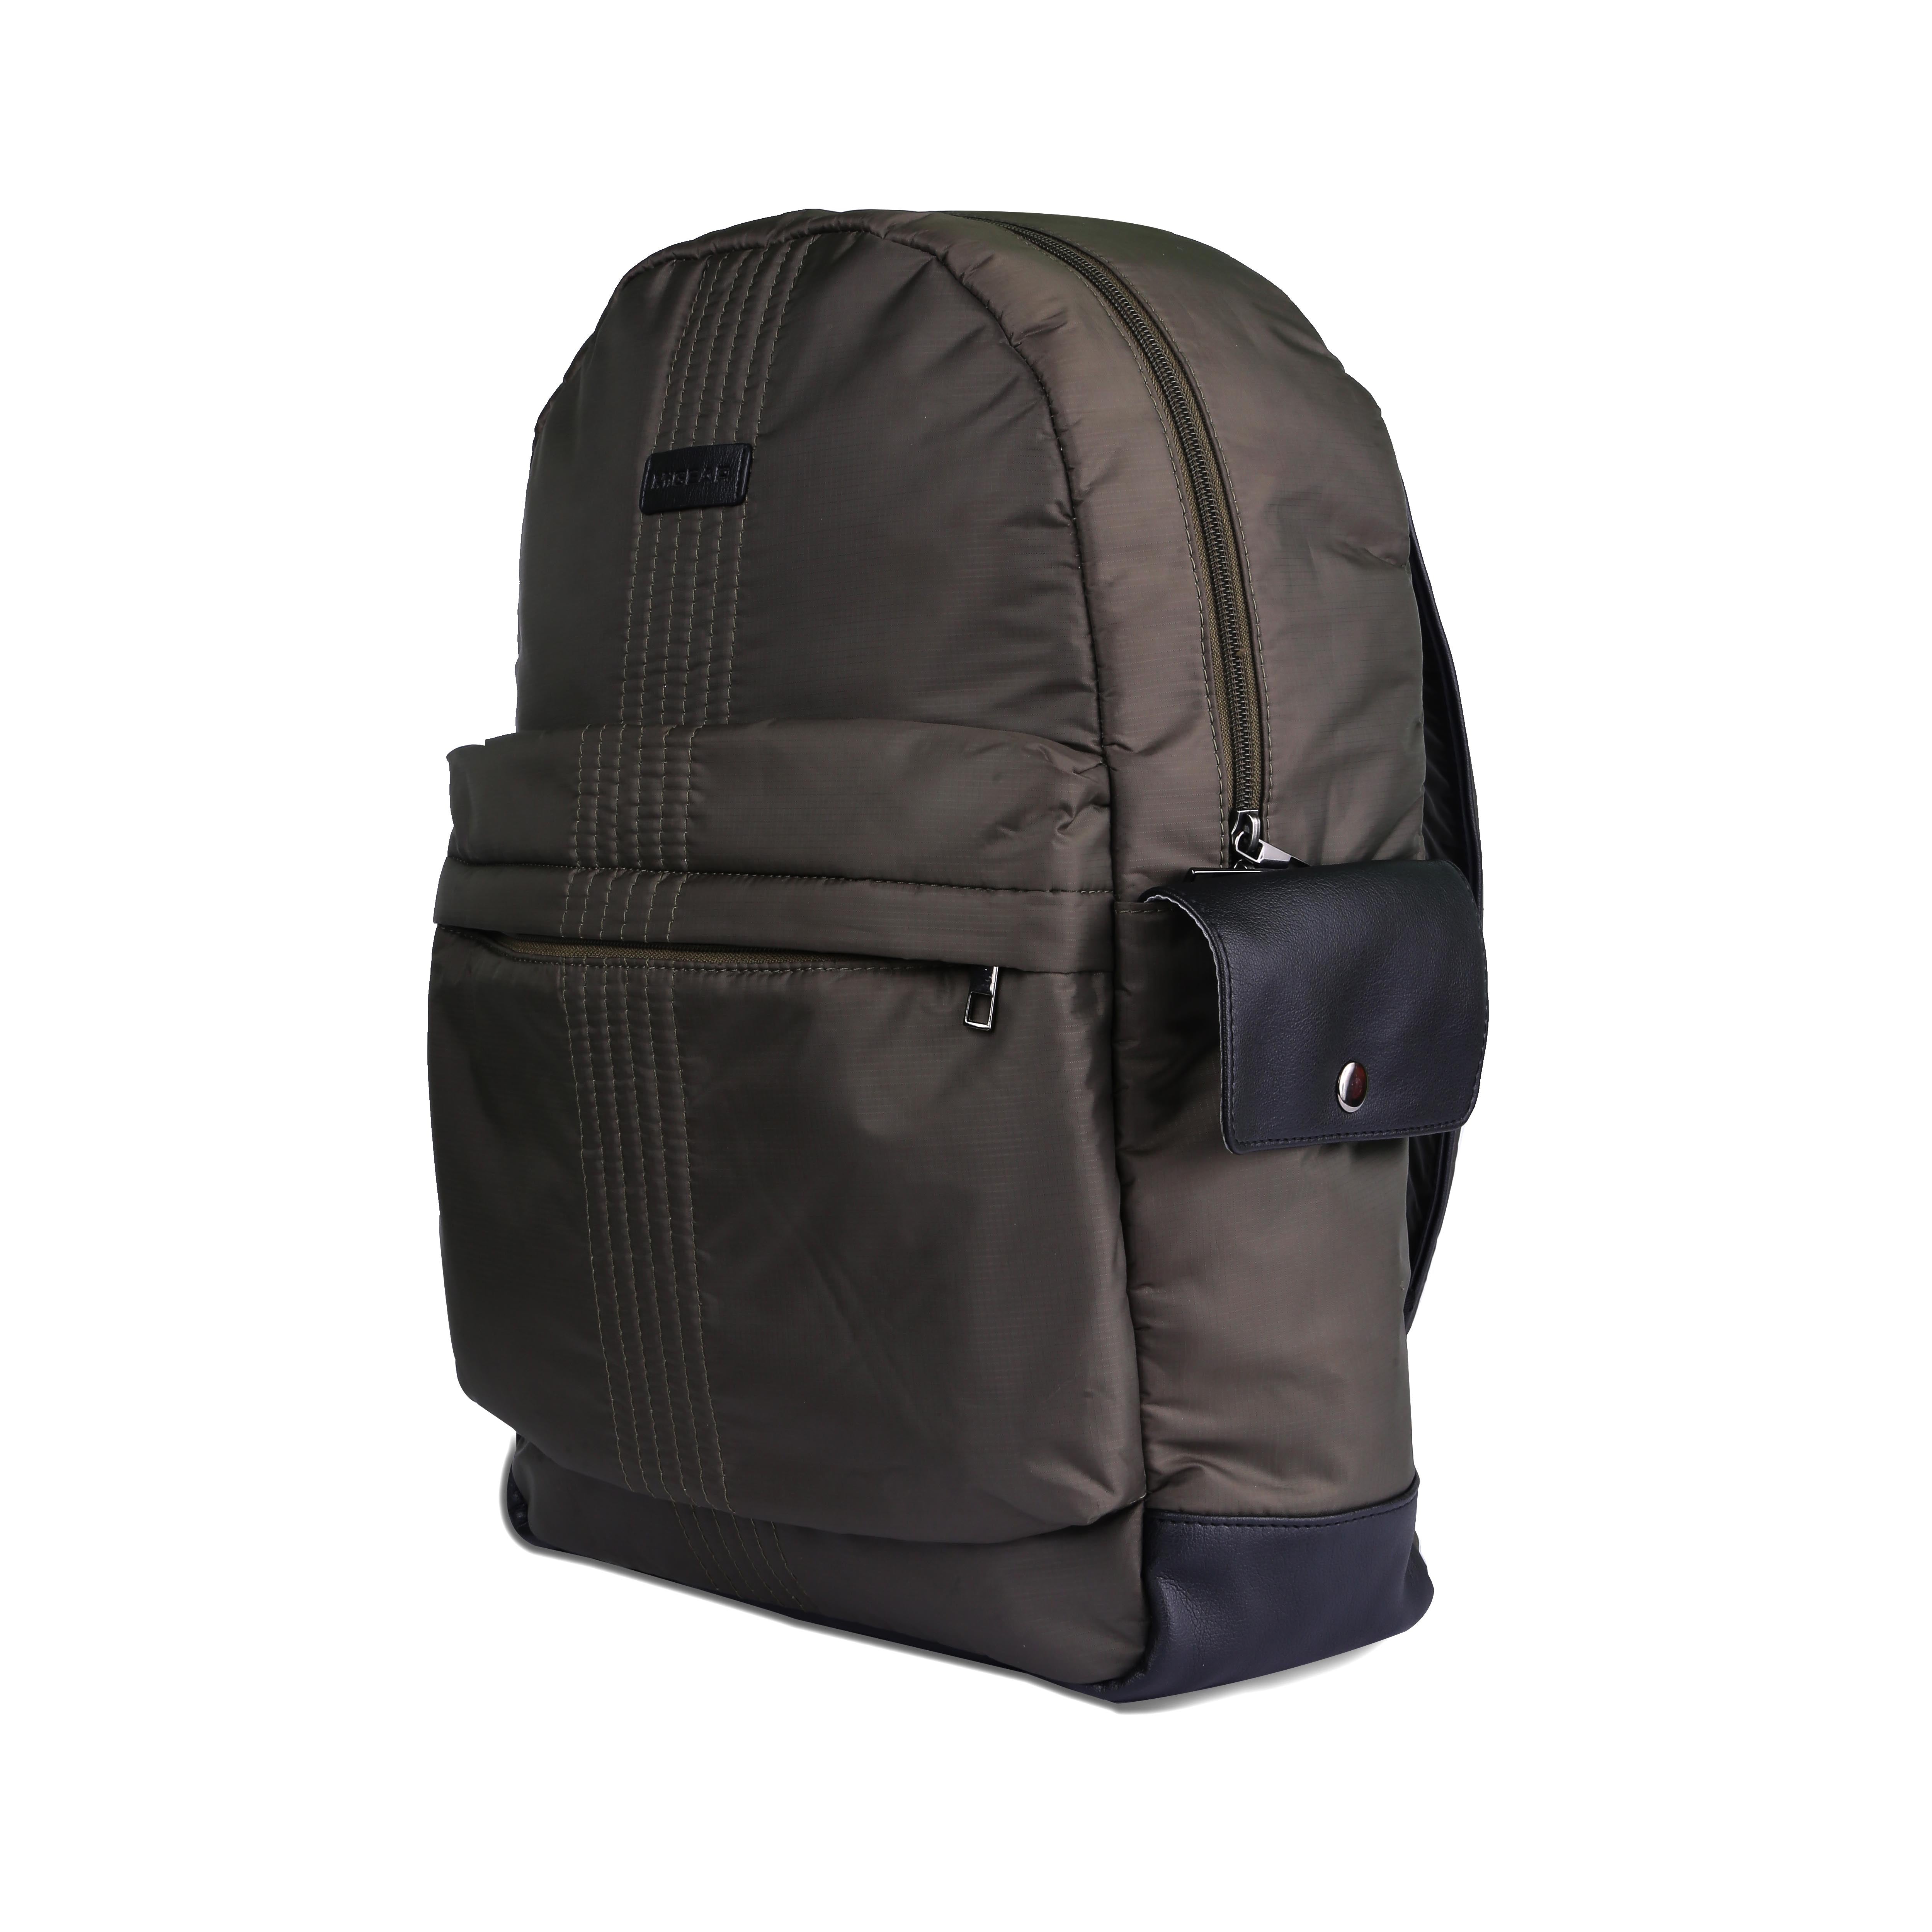 JourneyJunction Backpack